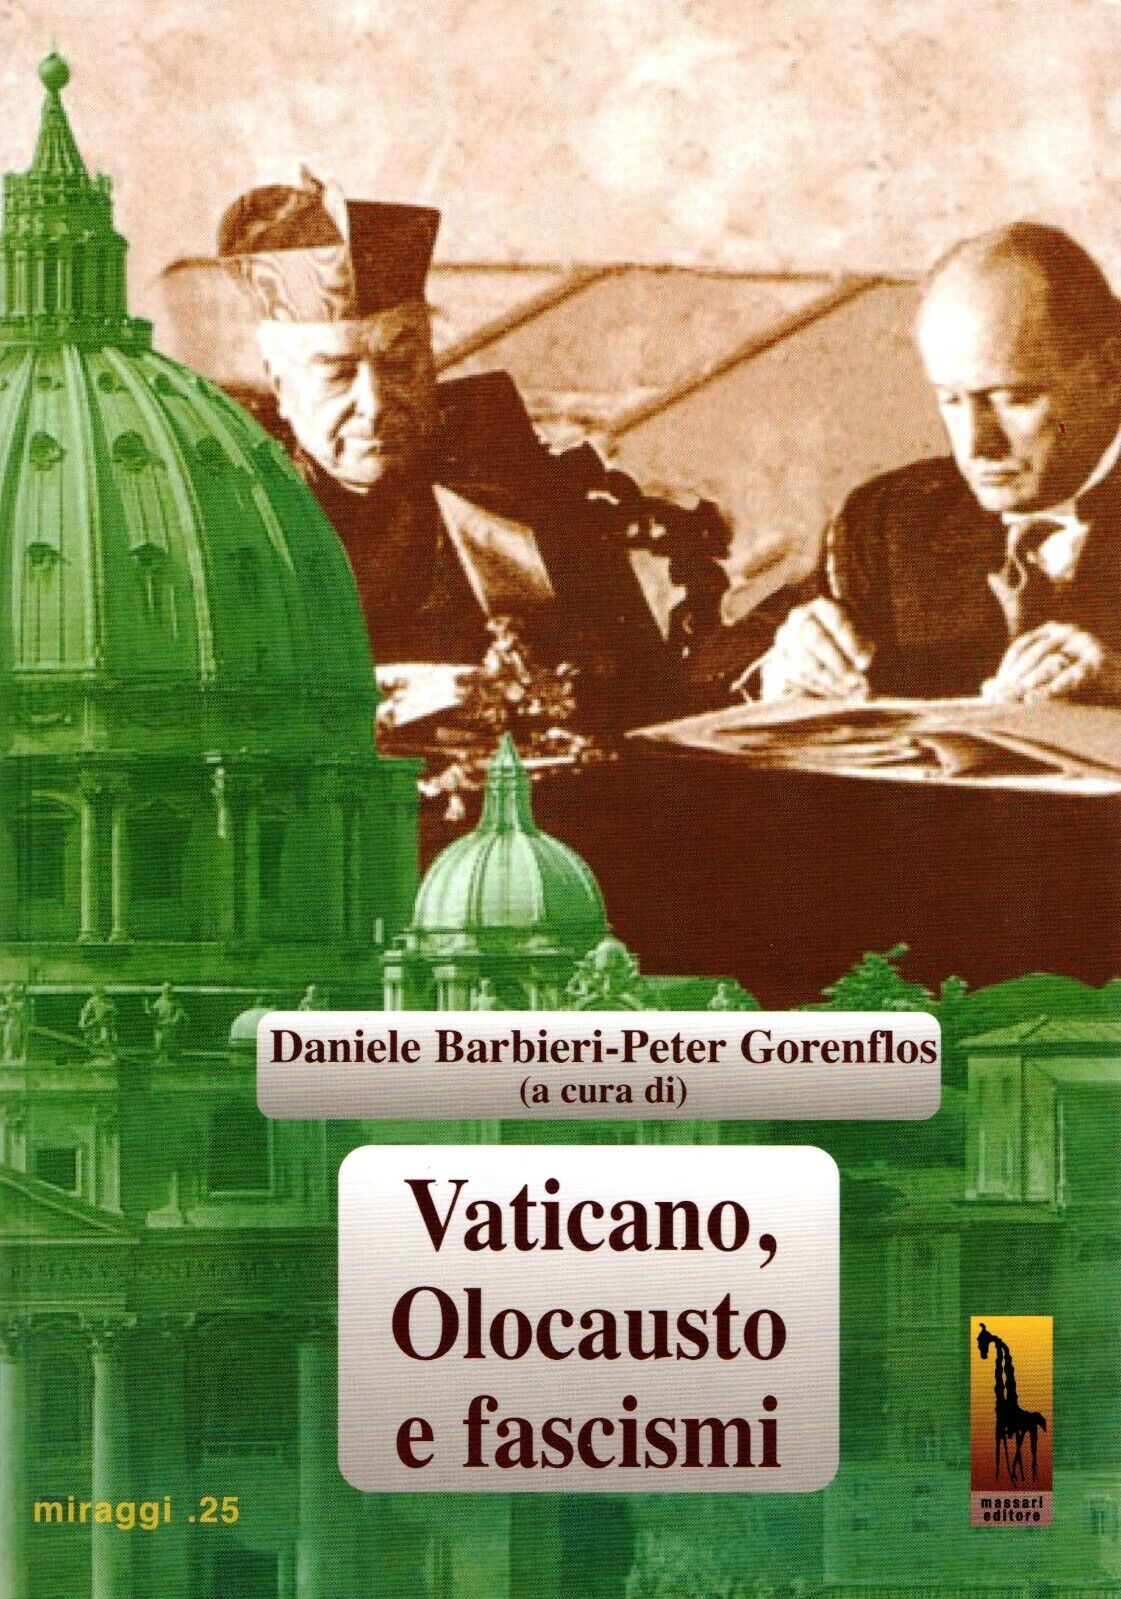 Vaticano, olocausto e fascismi di Daniele Barbieri, Peter Gorenflos,  2017,  Mas